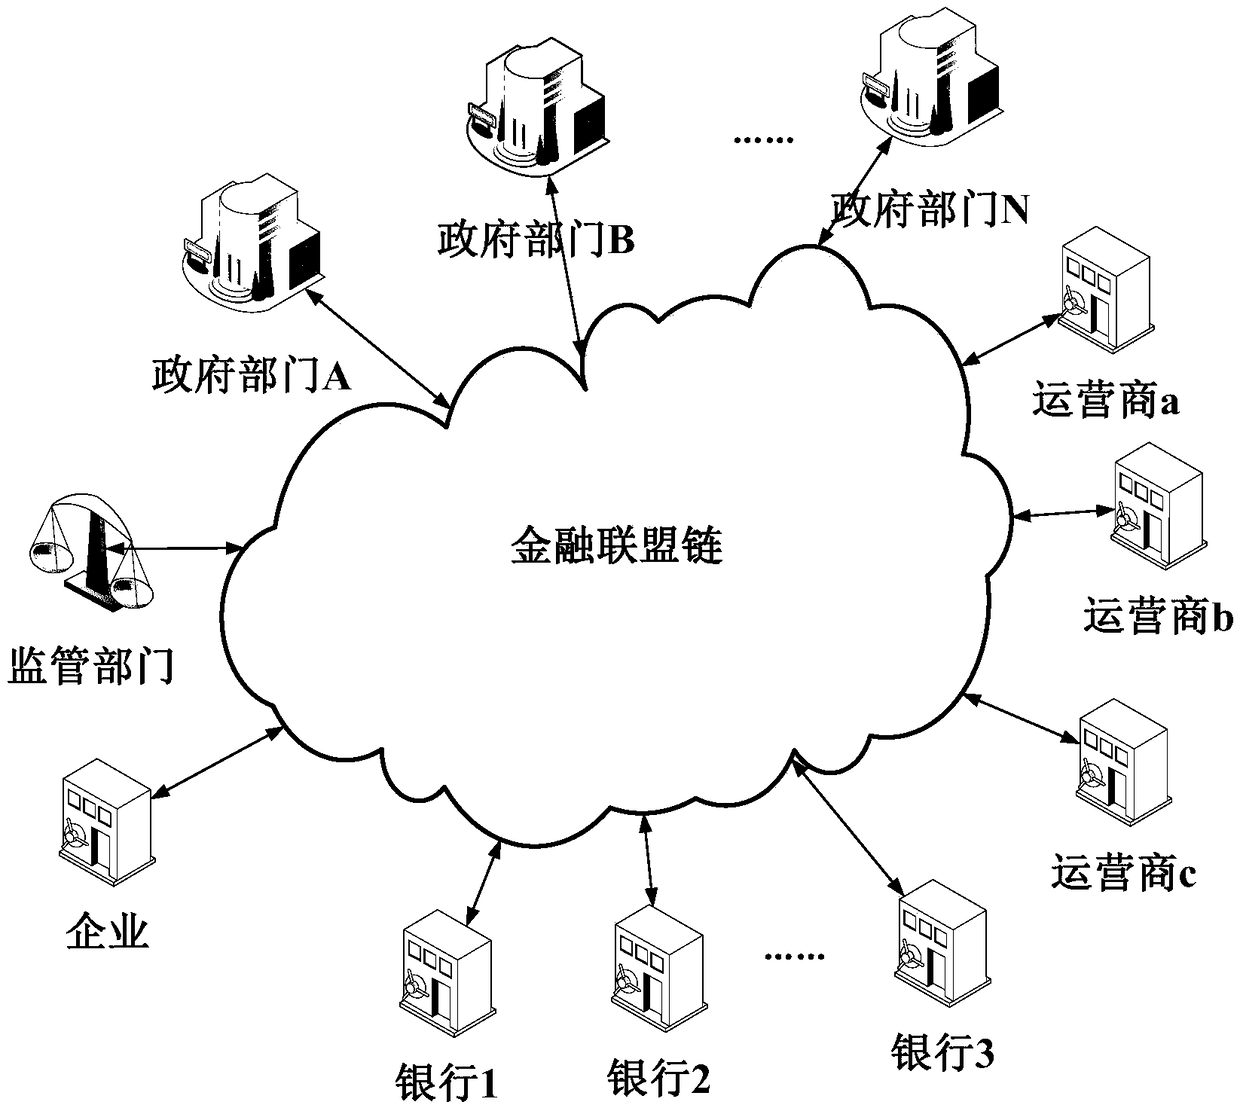 Customer data management system based on block chain